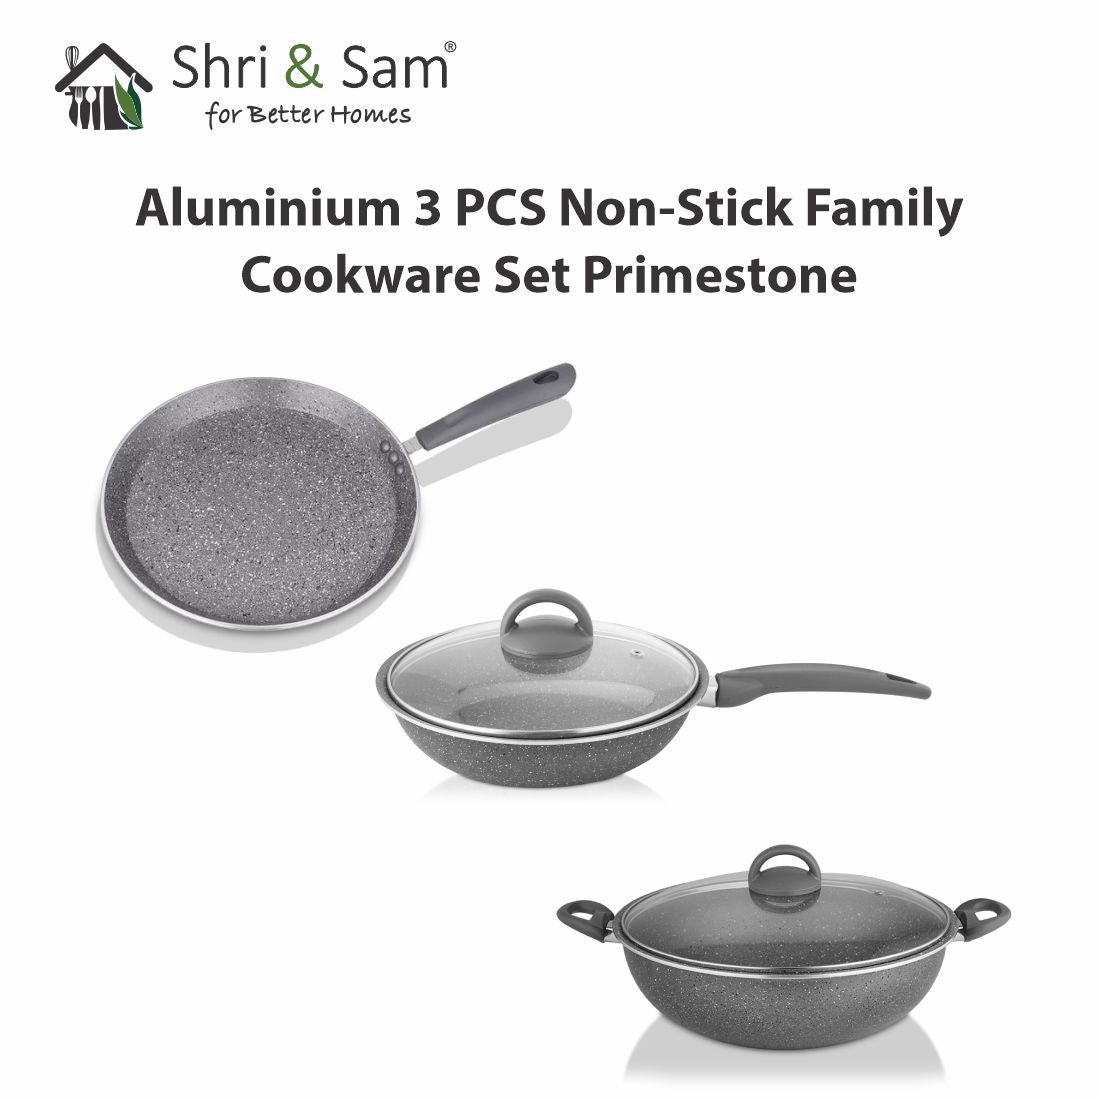 Aluminium 3 PCS Non-Stick FAMILY Cookware Set Primestone